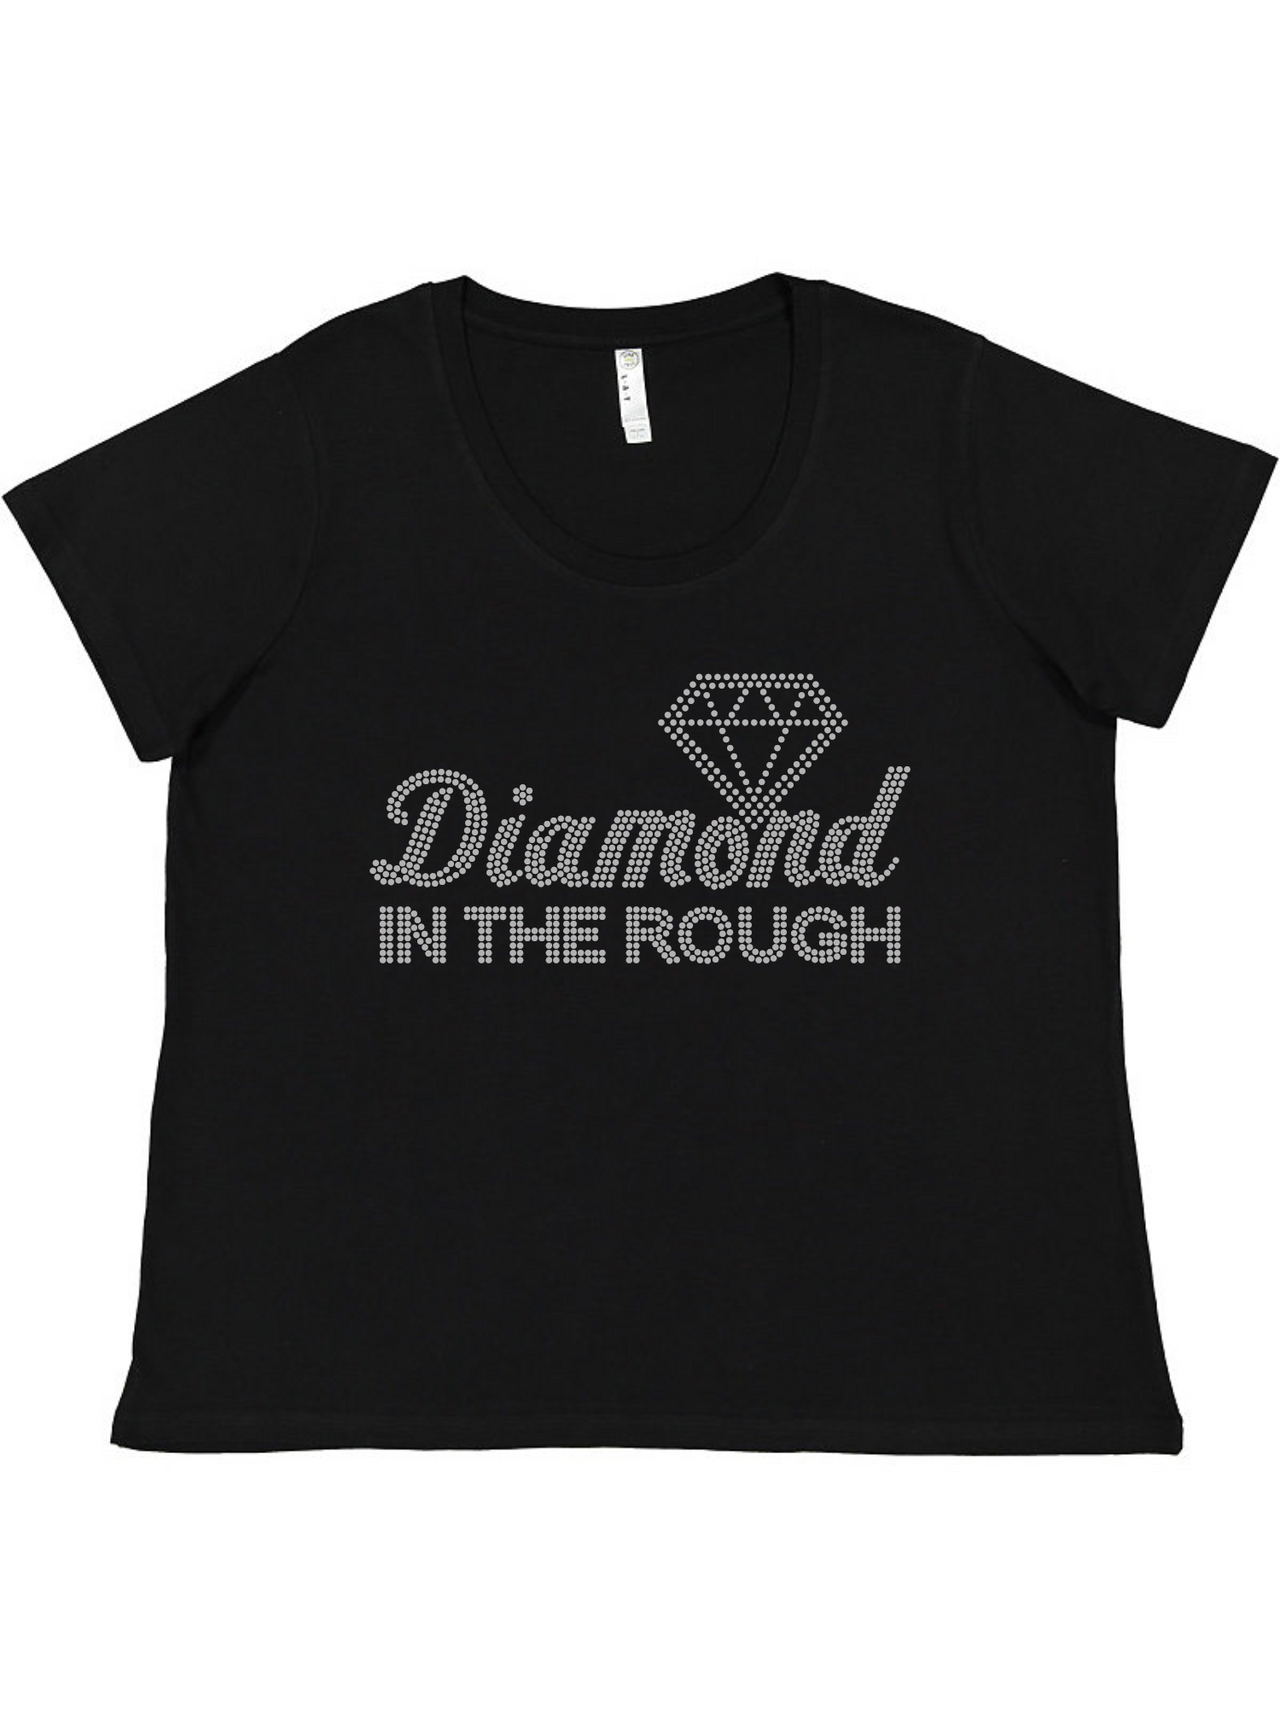 Diamond in the Rough Ladies Tee Ladies Shirt by Akron Pride Custom Tees | Akron Pride Custom Tees